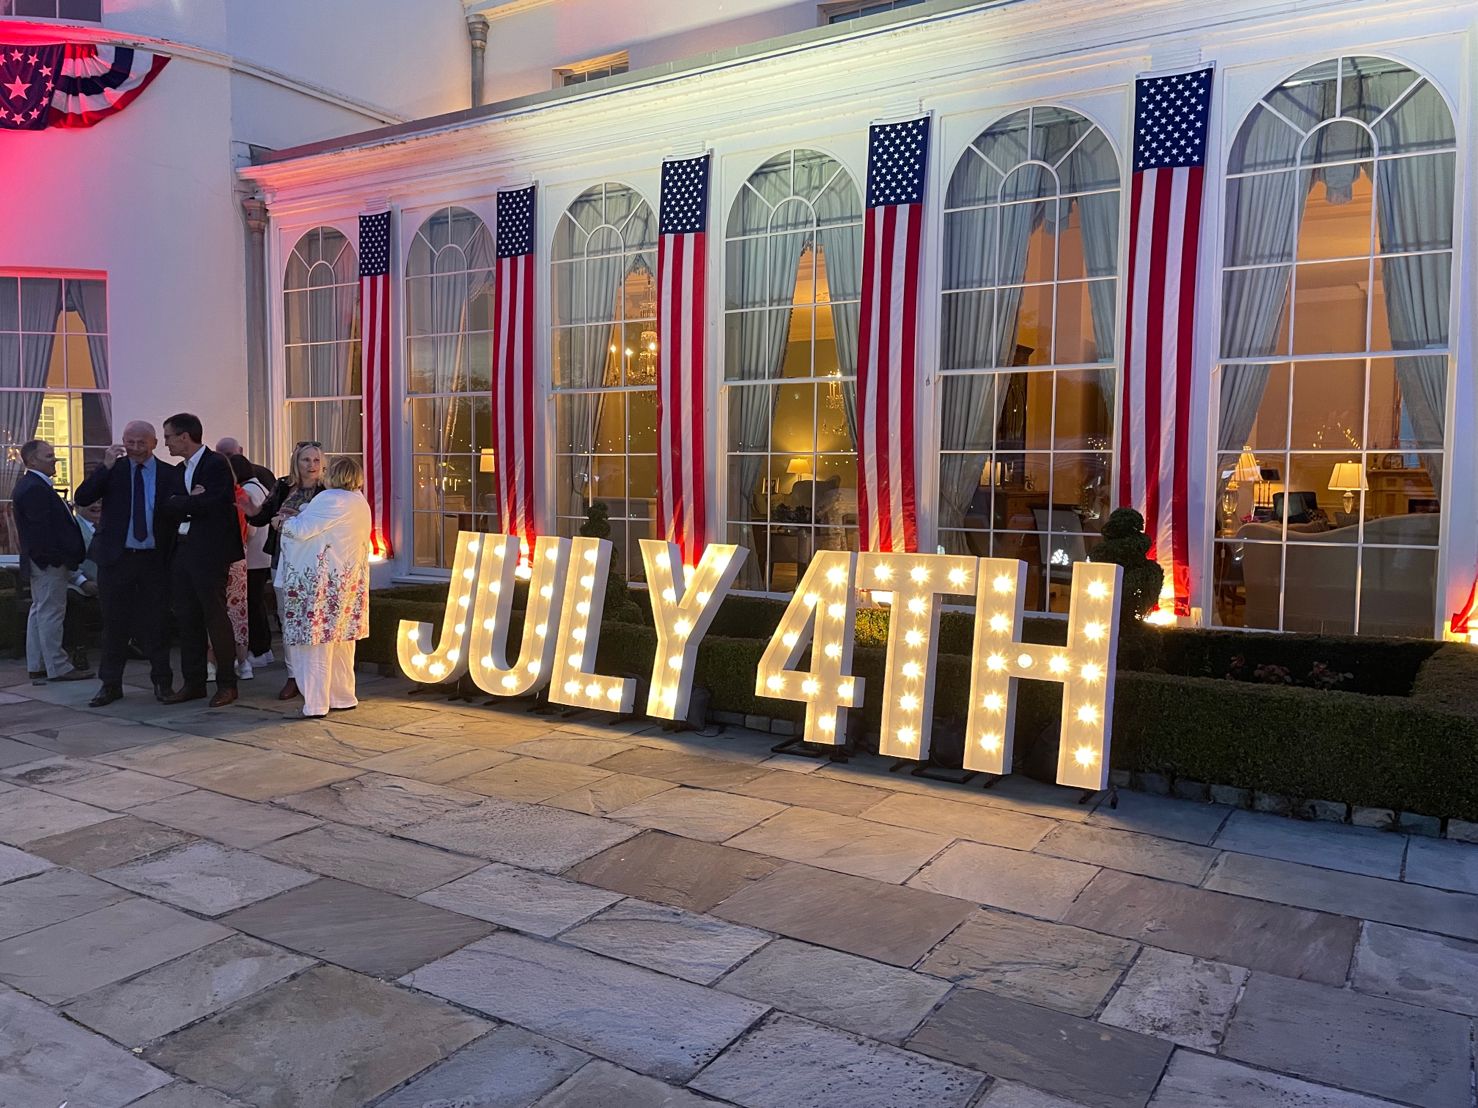 HealthTech Ireland Celebrates July 4th at The US Embassy